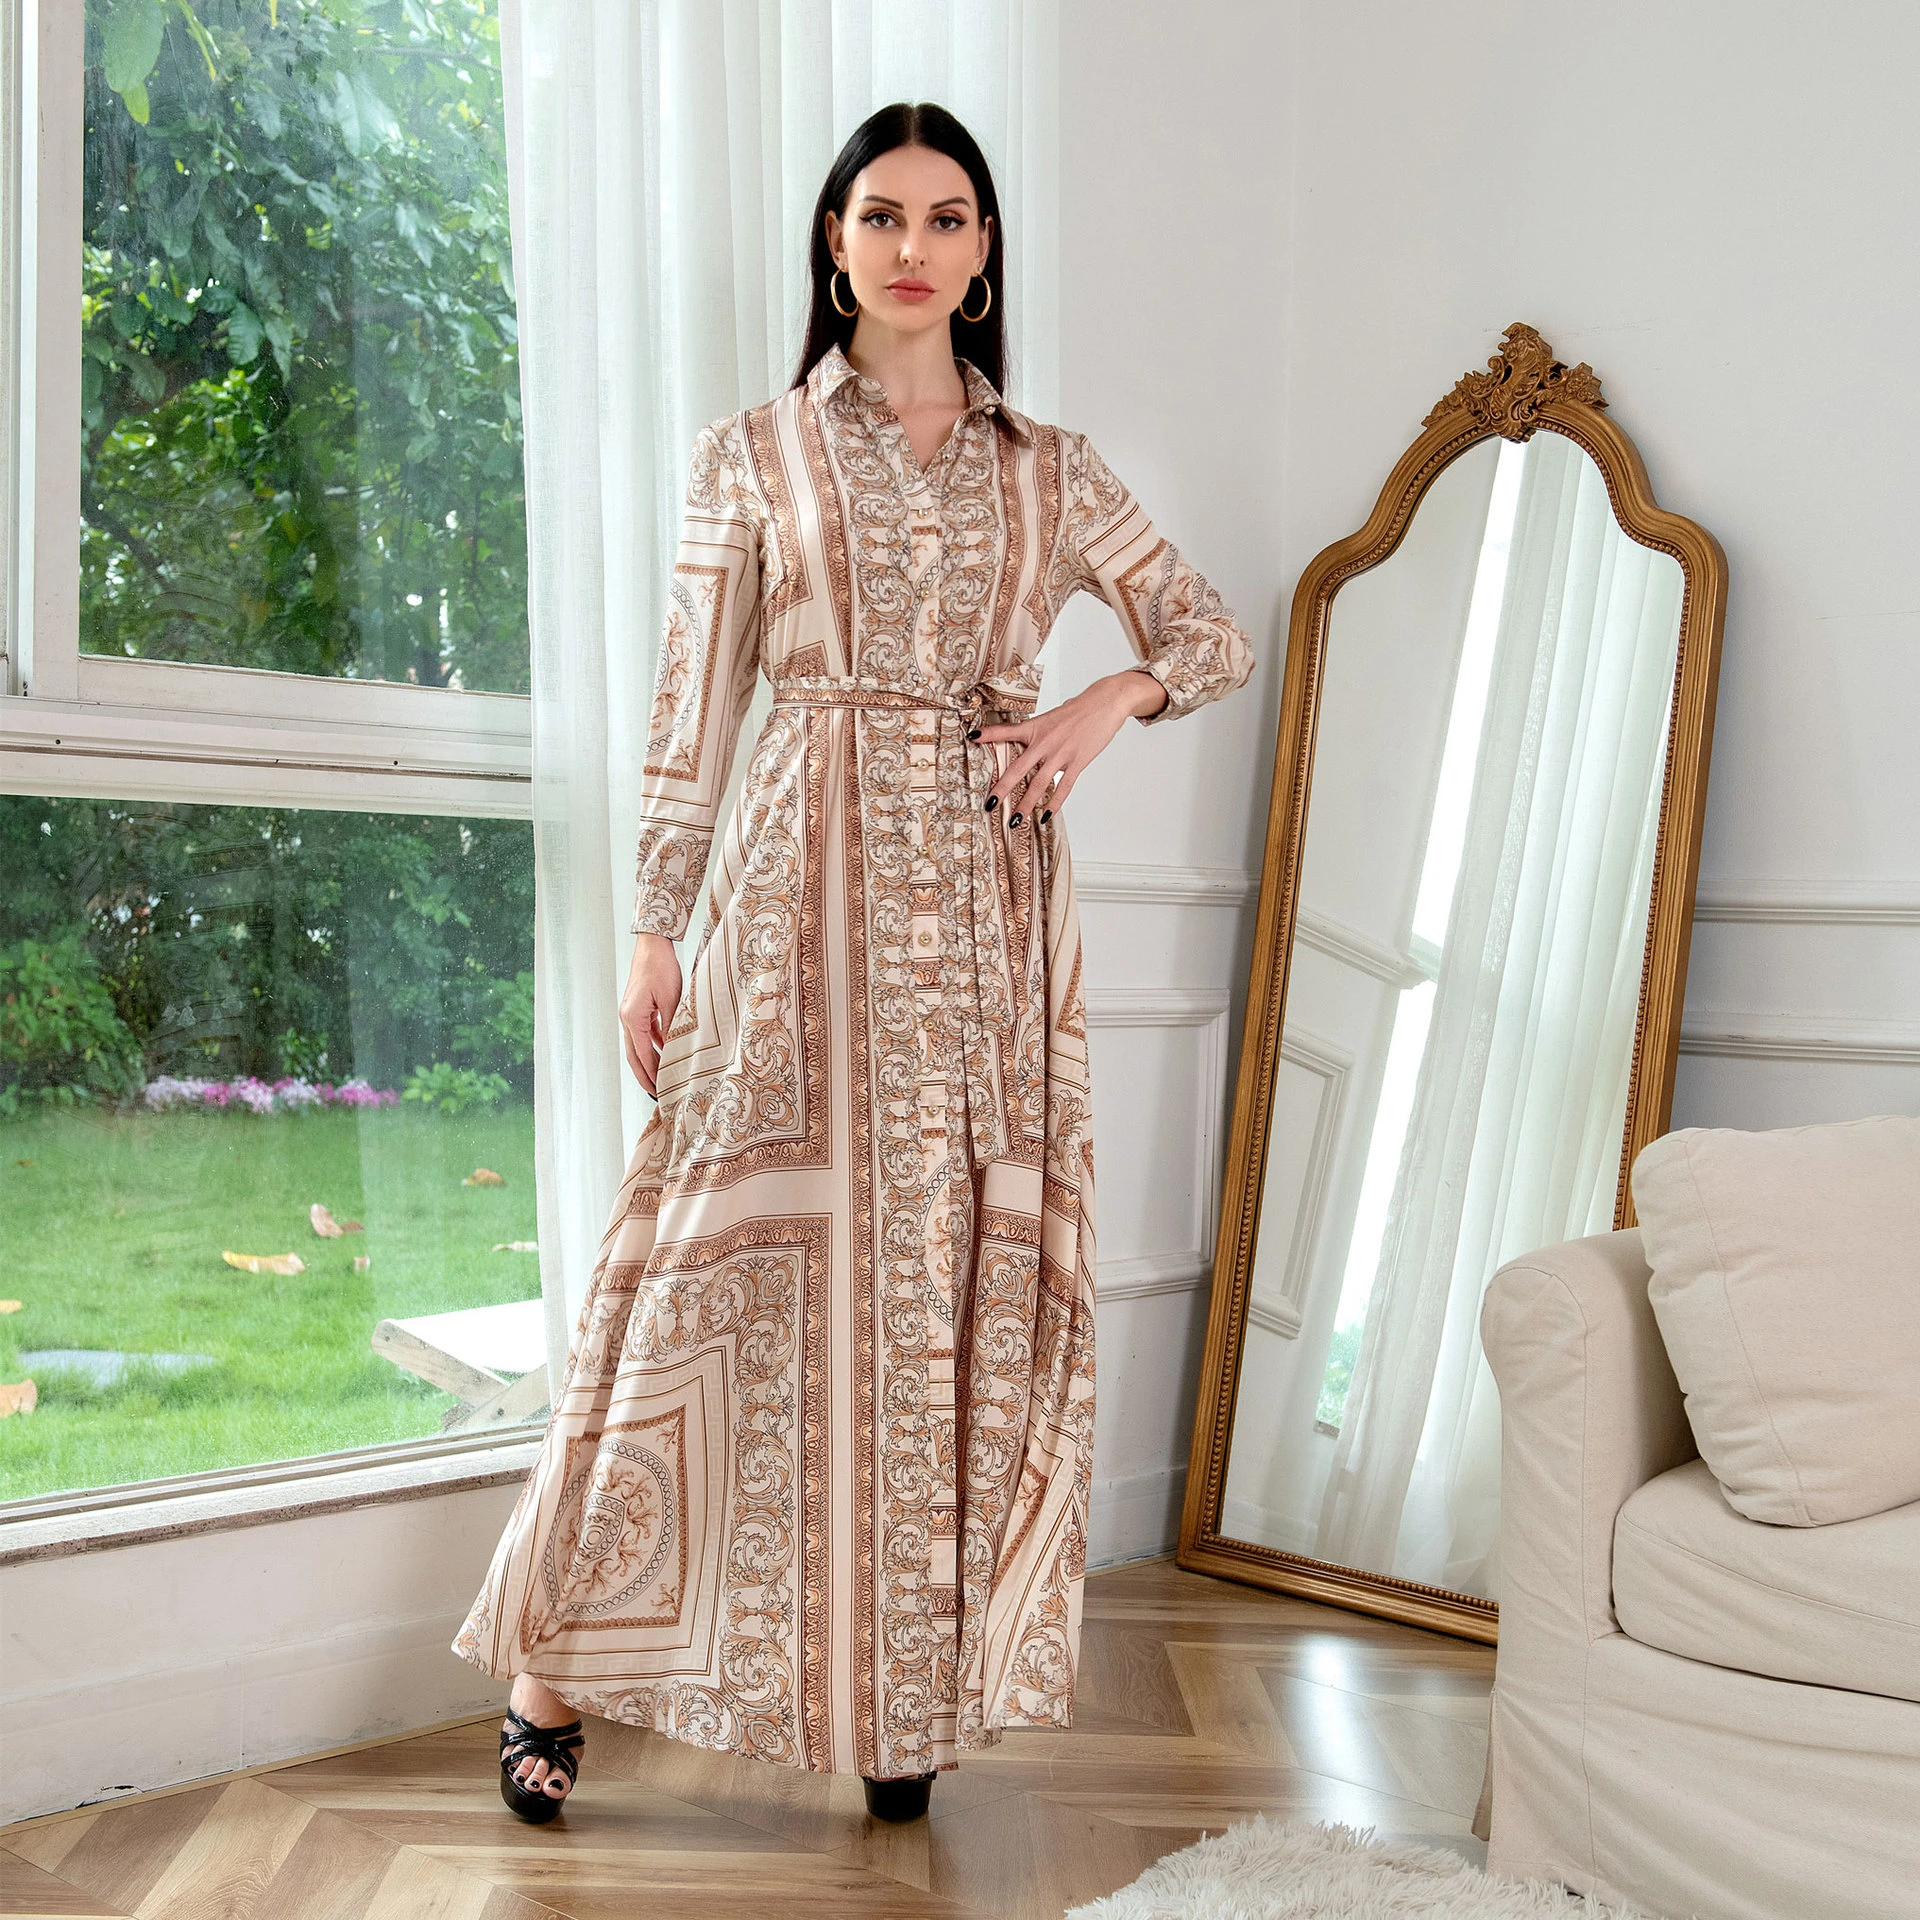 Elegant Long Sleeve Print Dress Women Ethnic Kaftan Shirt Maxi Abaya Dubai Casual Women's Dresses Djellaba - AliExpress